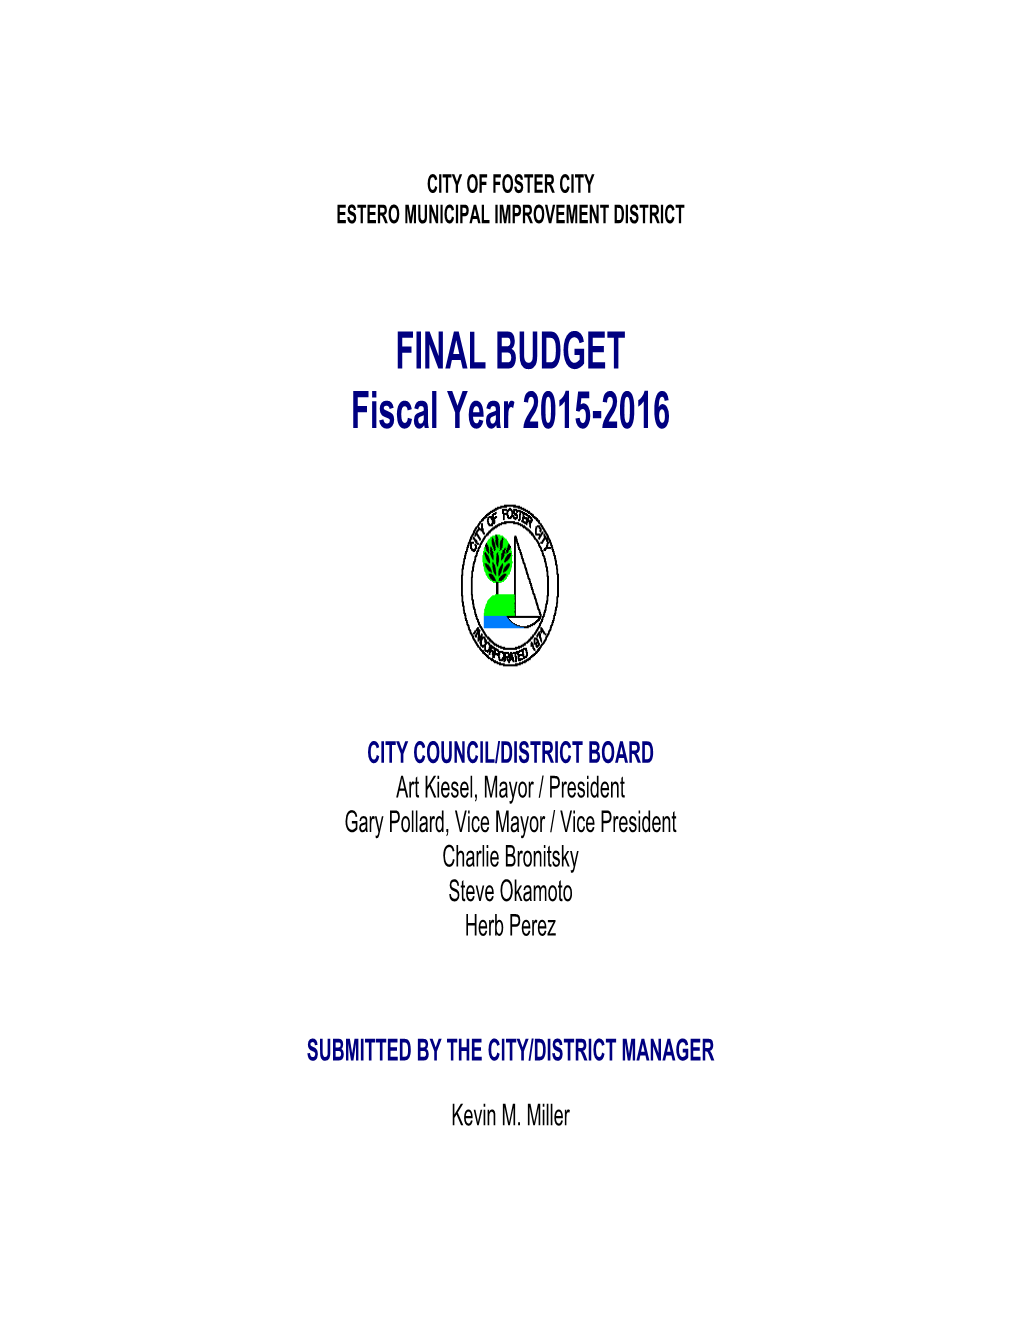 Fy 2015-2016 Final Budget